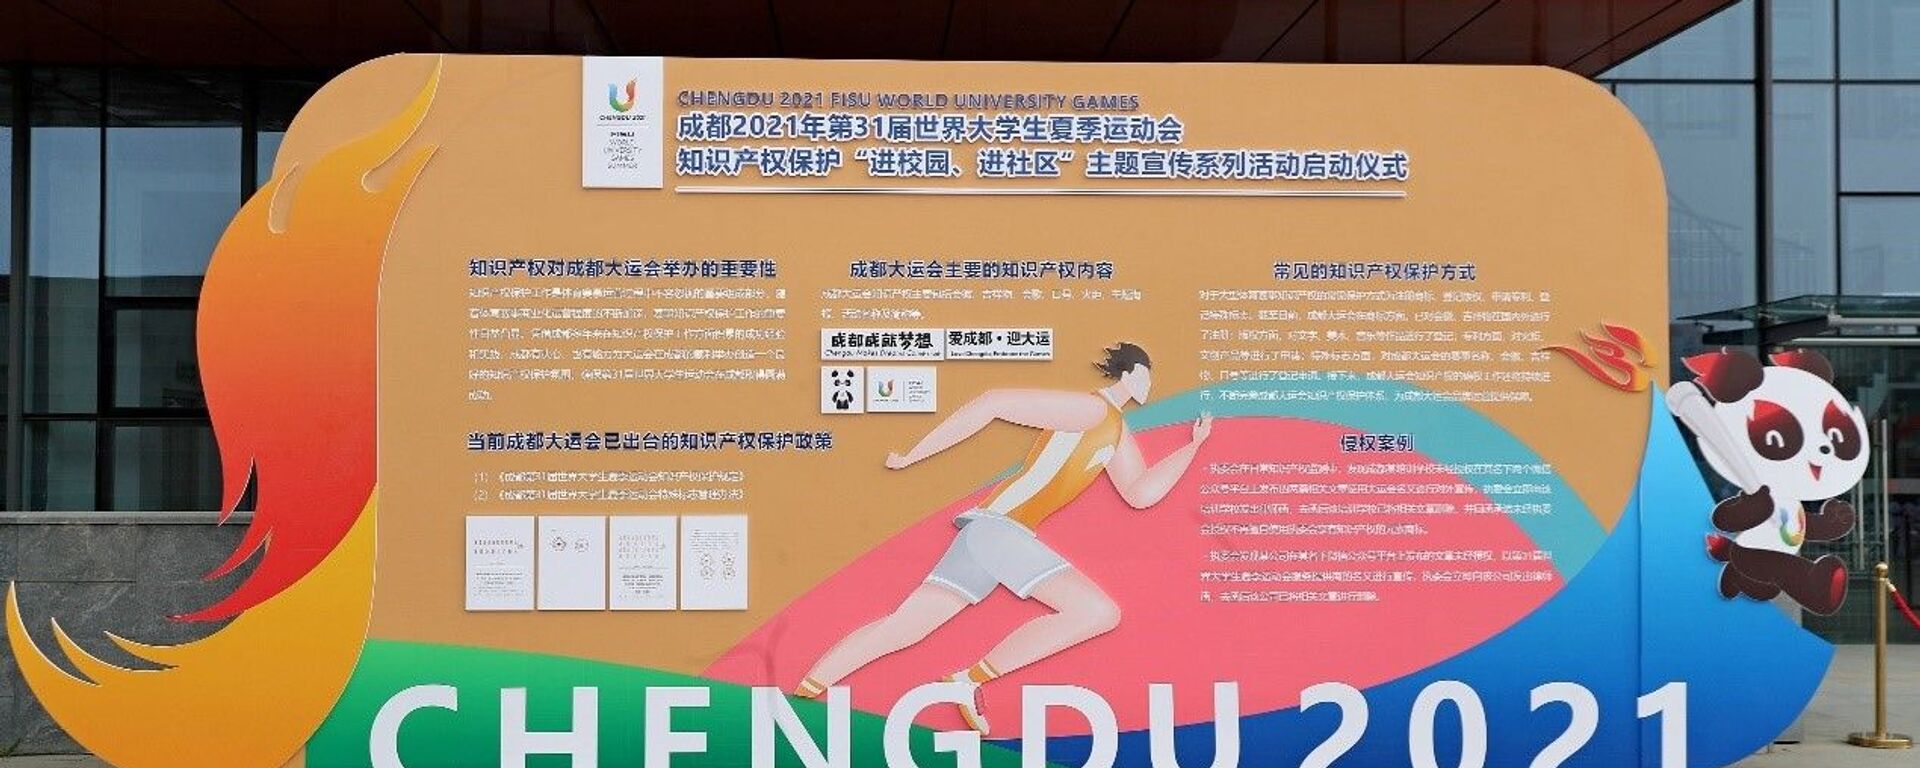 Chengdu 2021 31st Summer Universiade - 俄羅斯衛星通訊社, 1920, 02.04.2021